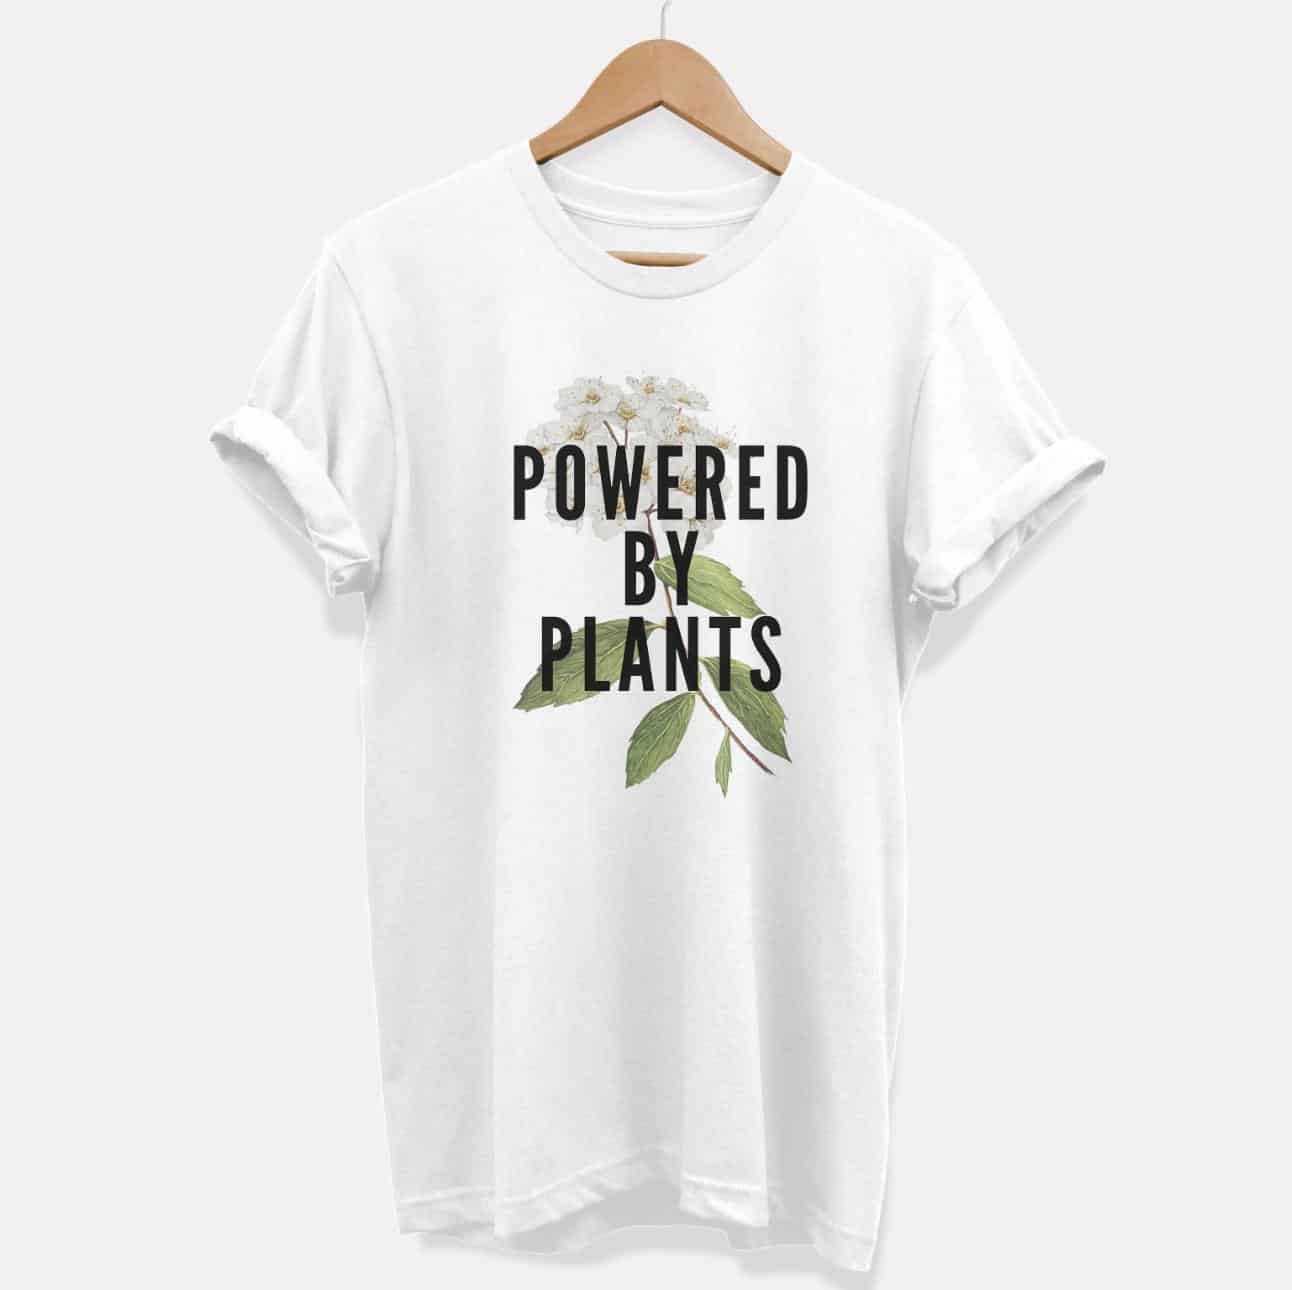 Vegan T shirt Organic Cotton T shirts Vegan Clothing Brands Vegan Clothing Plant Based T Shirts Unisex Powered by Plants Vegan T shirt